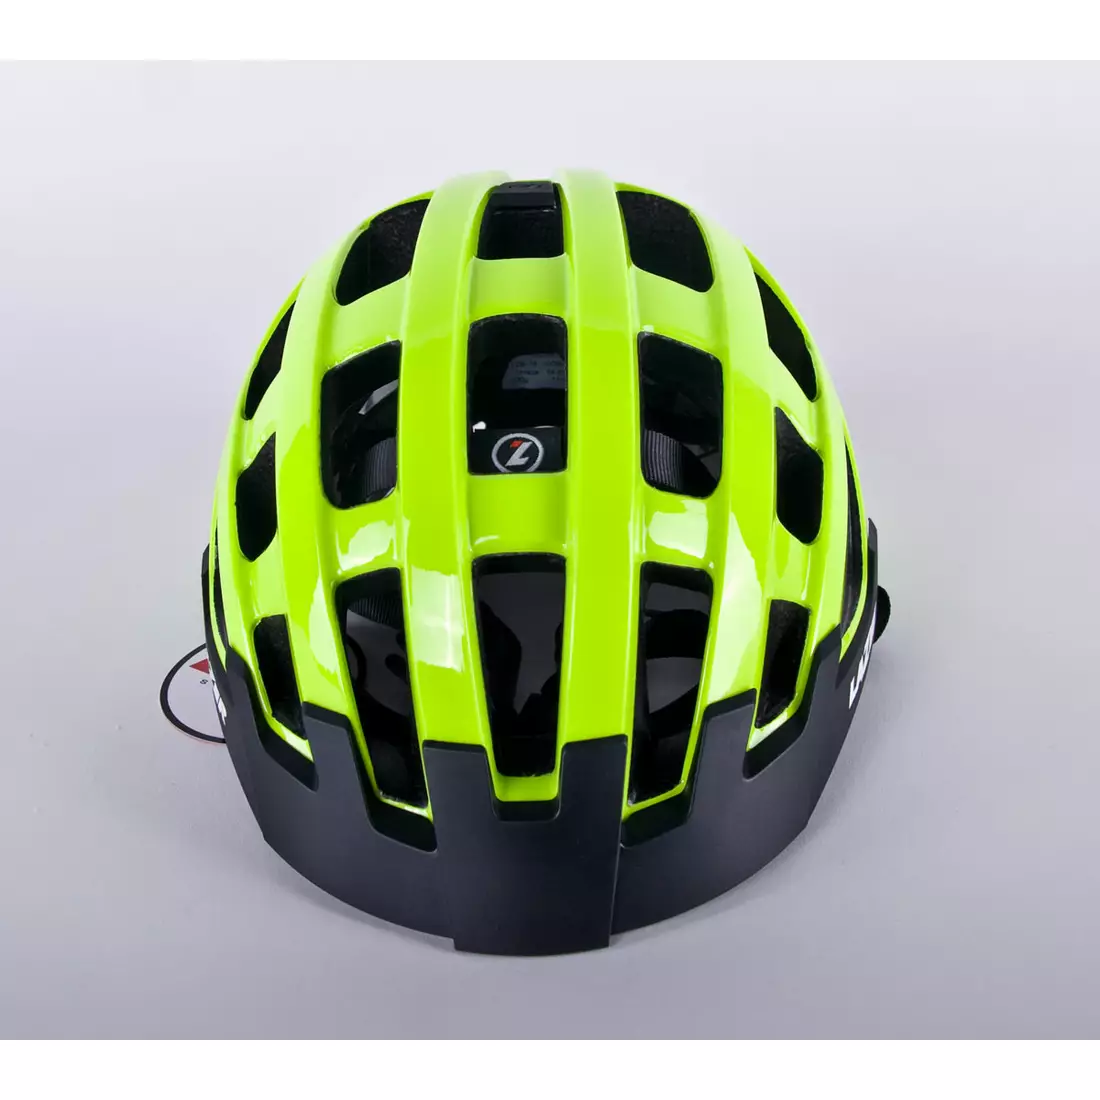 LAZER Compact bicycle helmet gelb